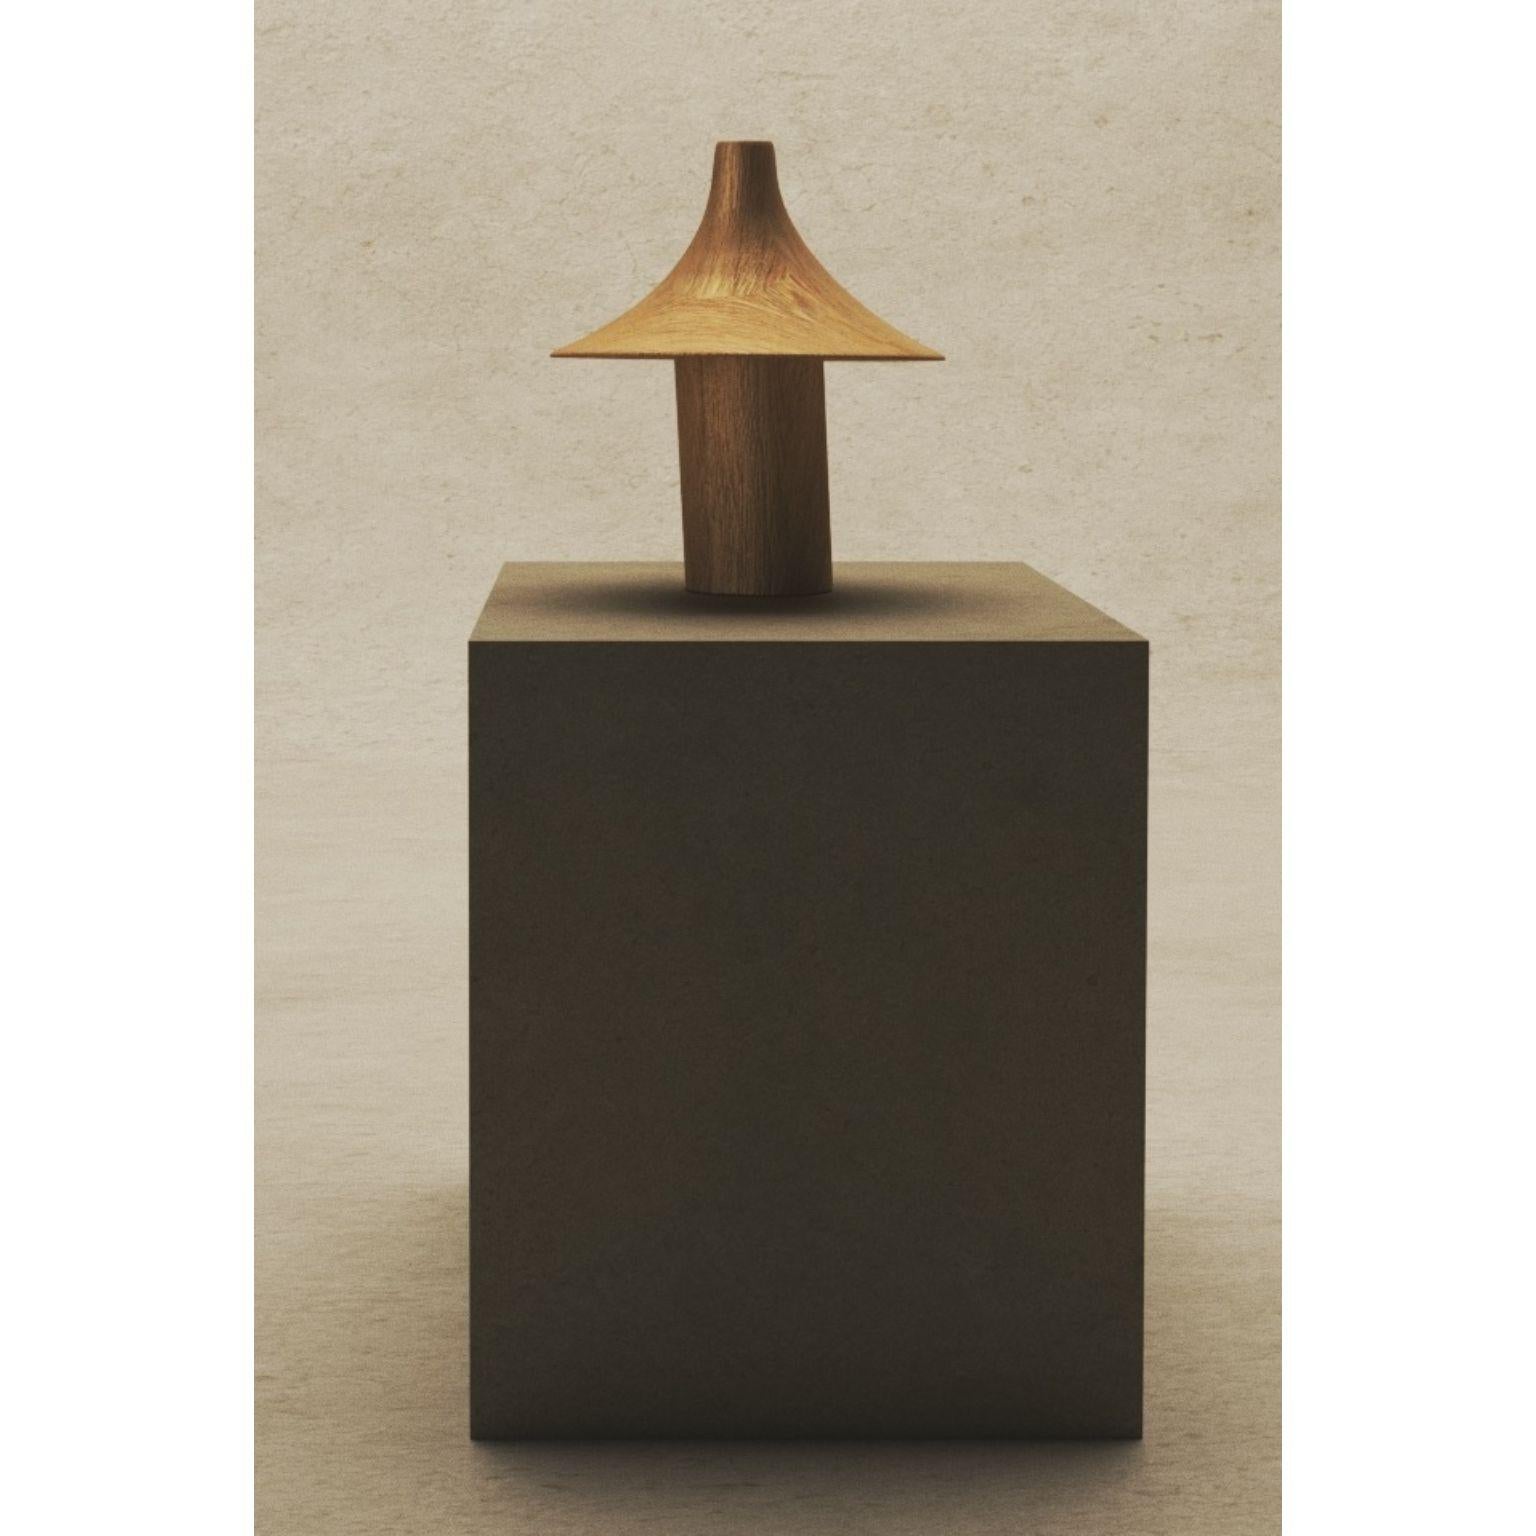 Small the Hat Lampe von Kilzi (Postmoderne) im Angebot